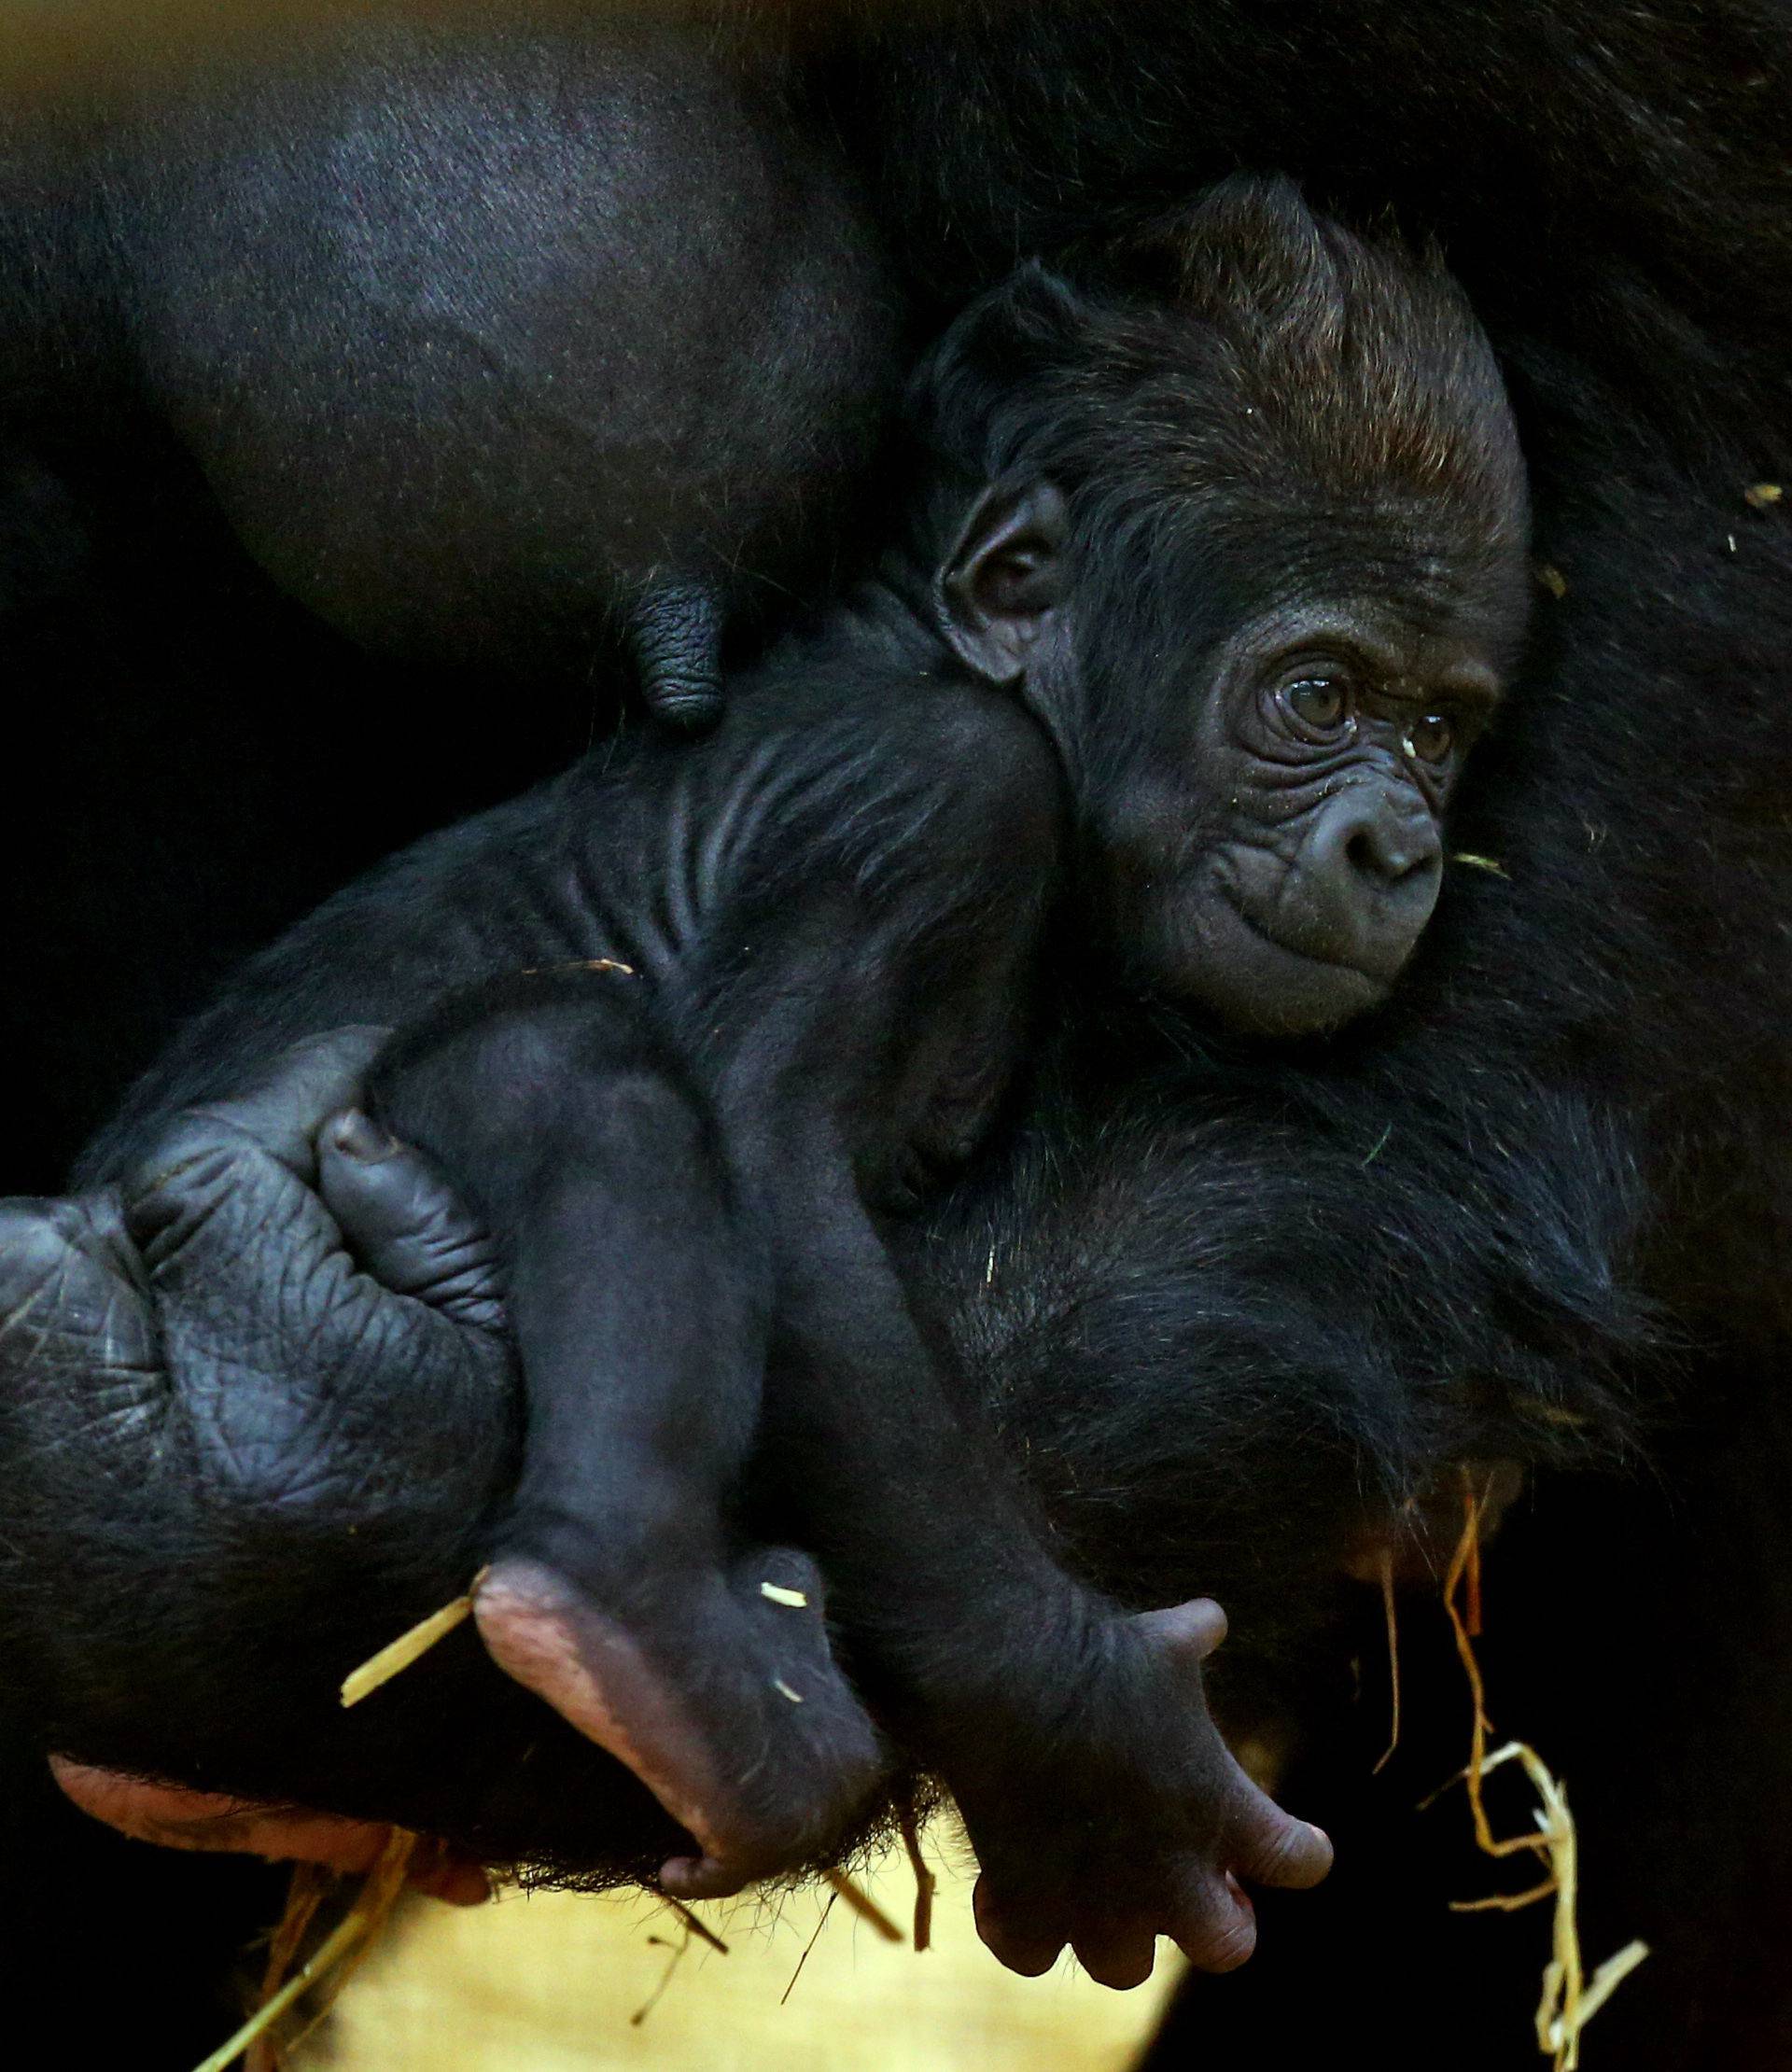 Baby gorilla at Howletts Wild Animal Park